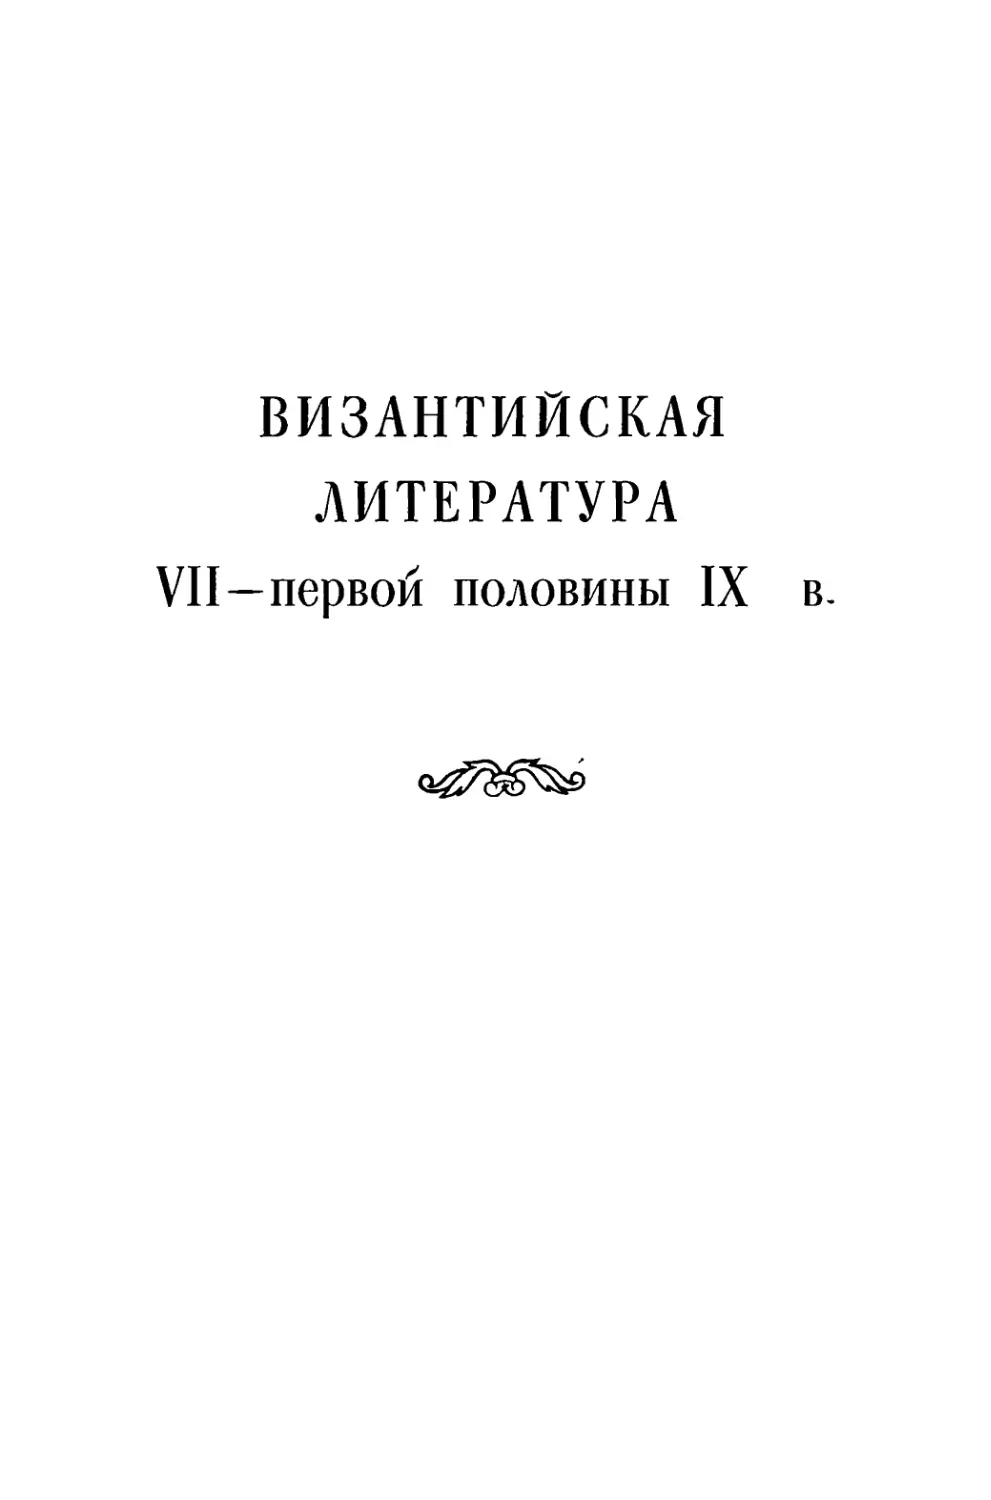 Византийская литература VІІ—первой половины IX в. Л. А. Фрейберг